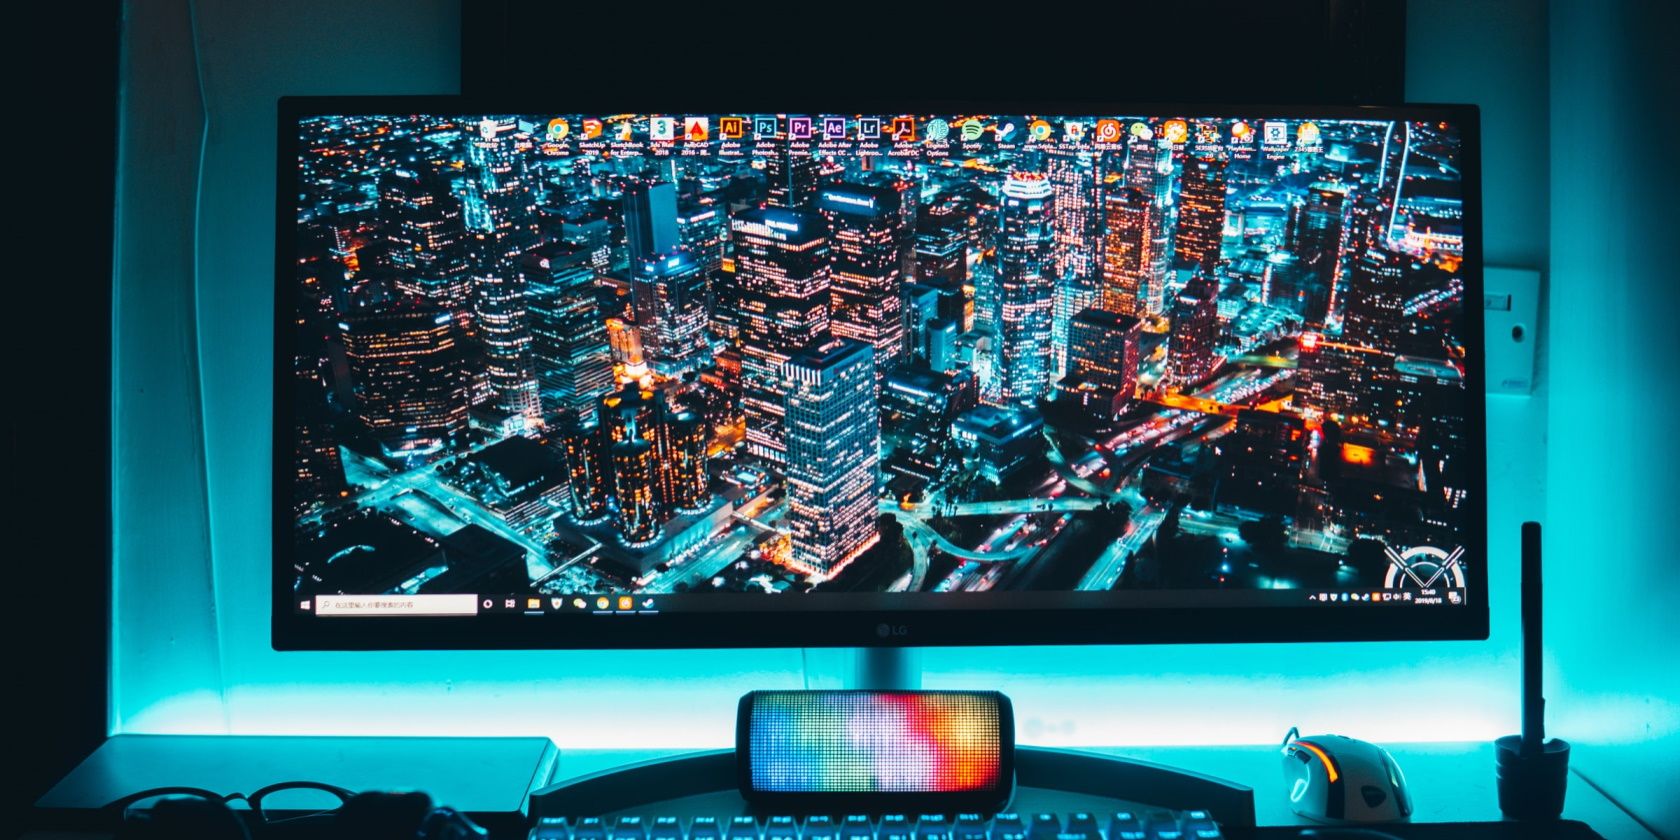 A flatscreen monitor with a very busy desktop